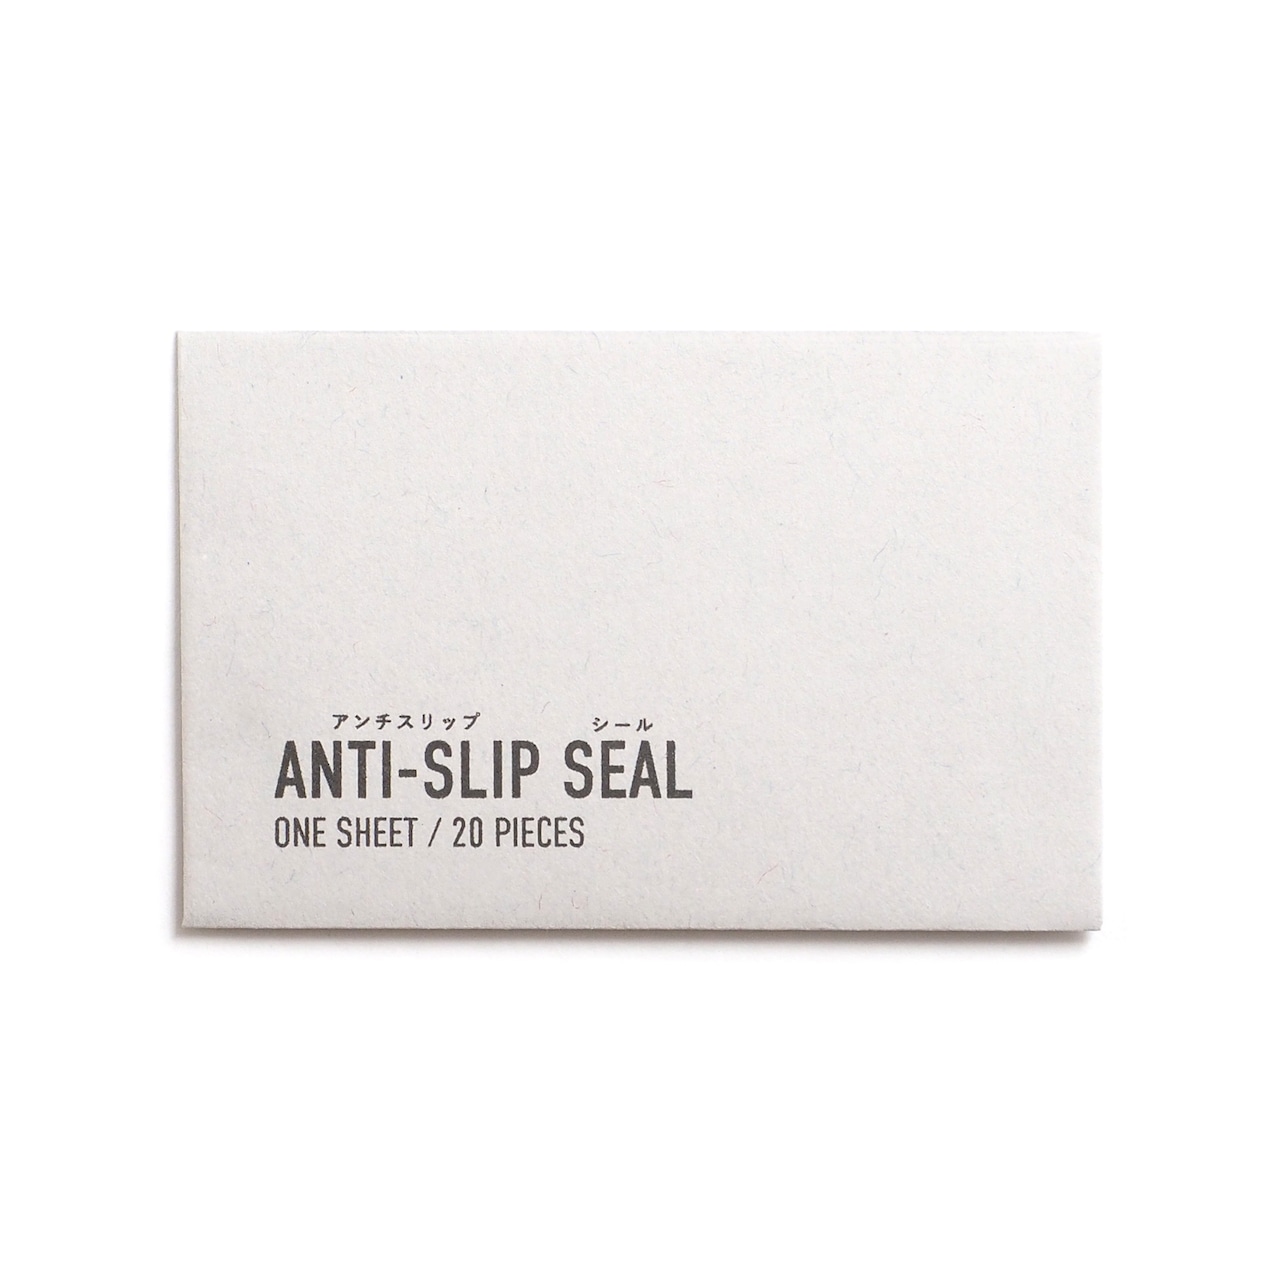 KENDAMA ANTI-SLIP SEAL / アンチスリップシール